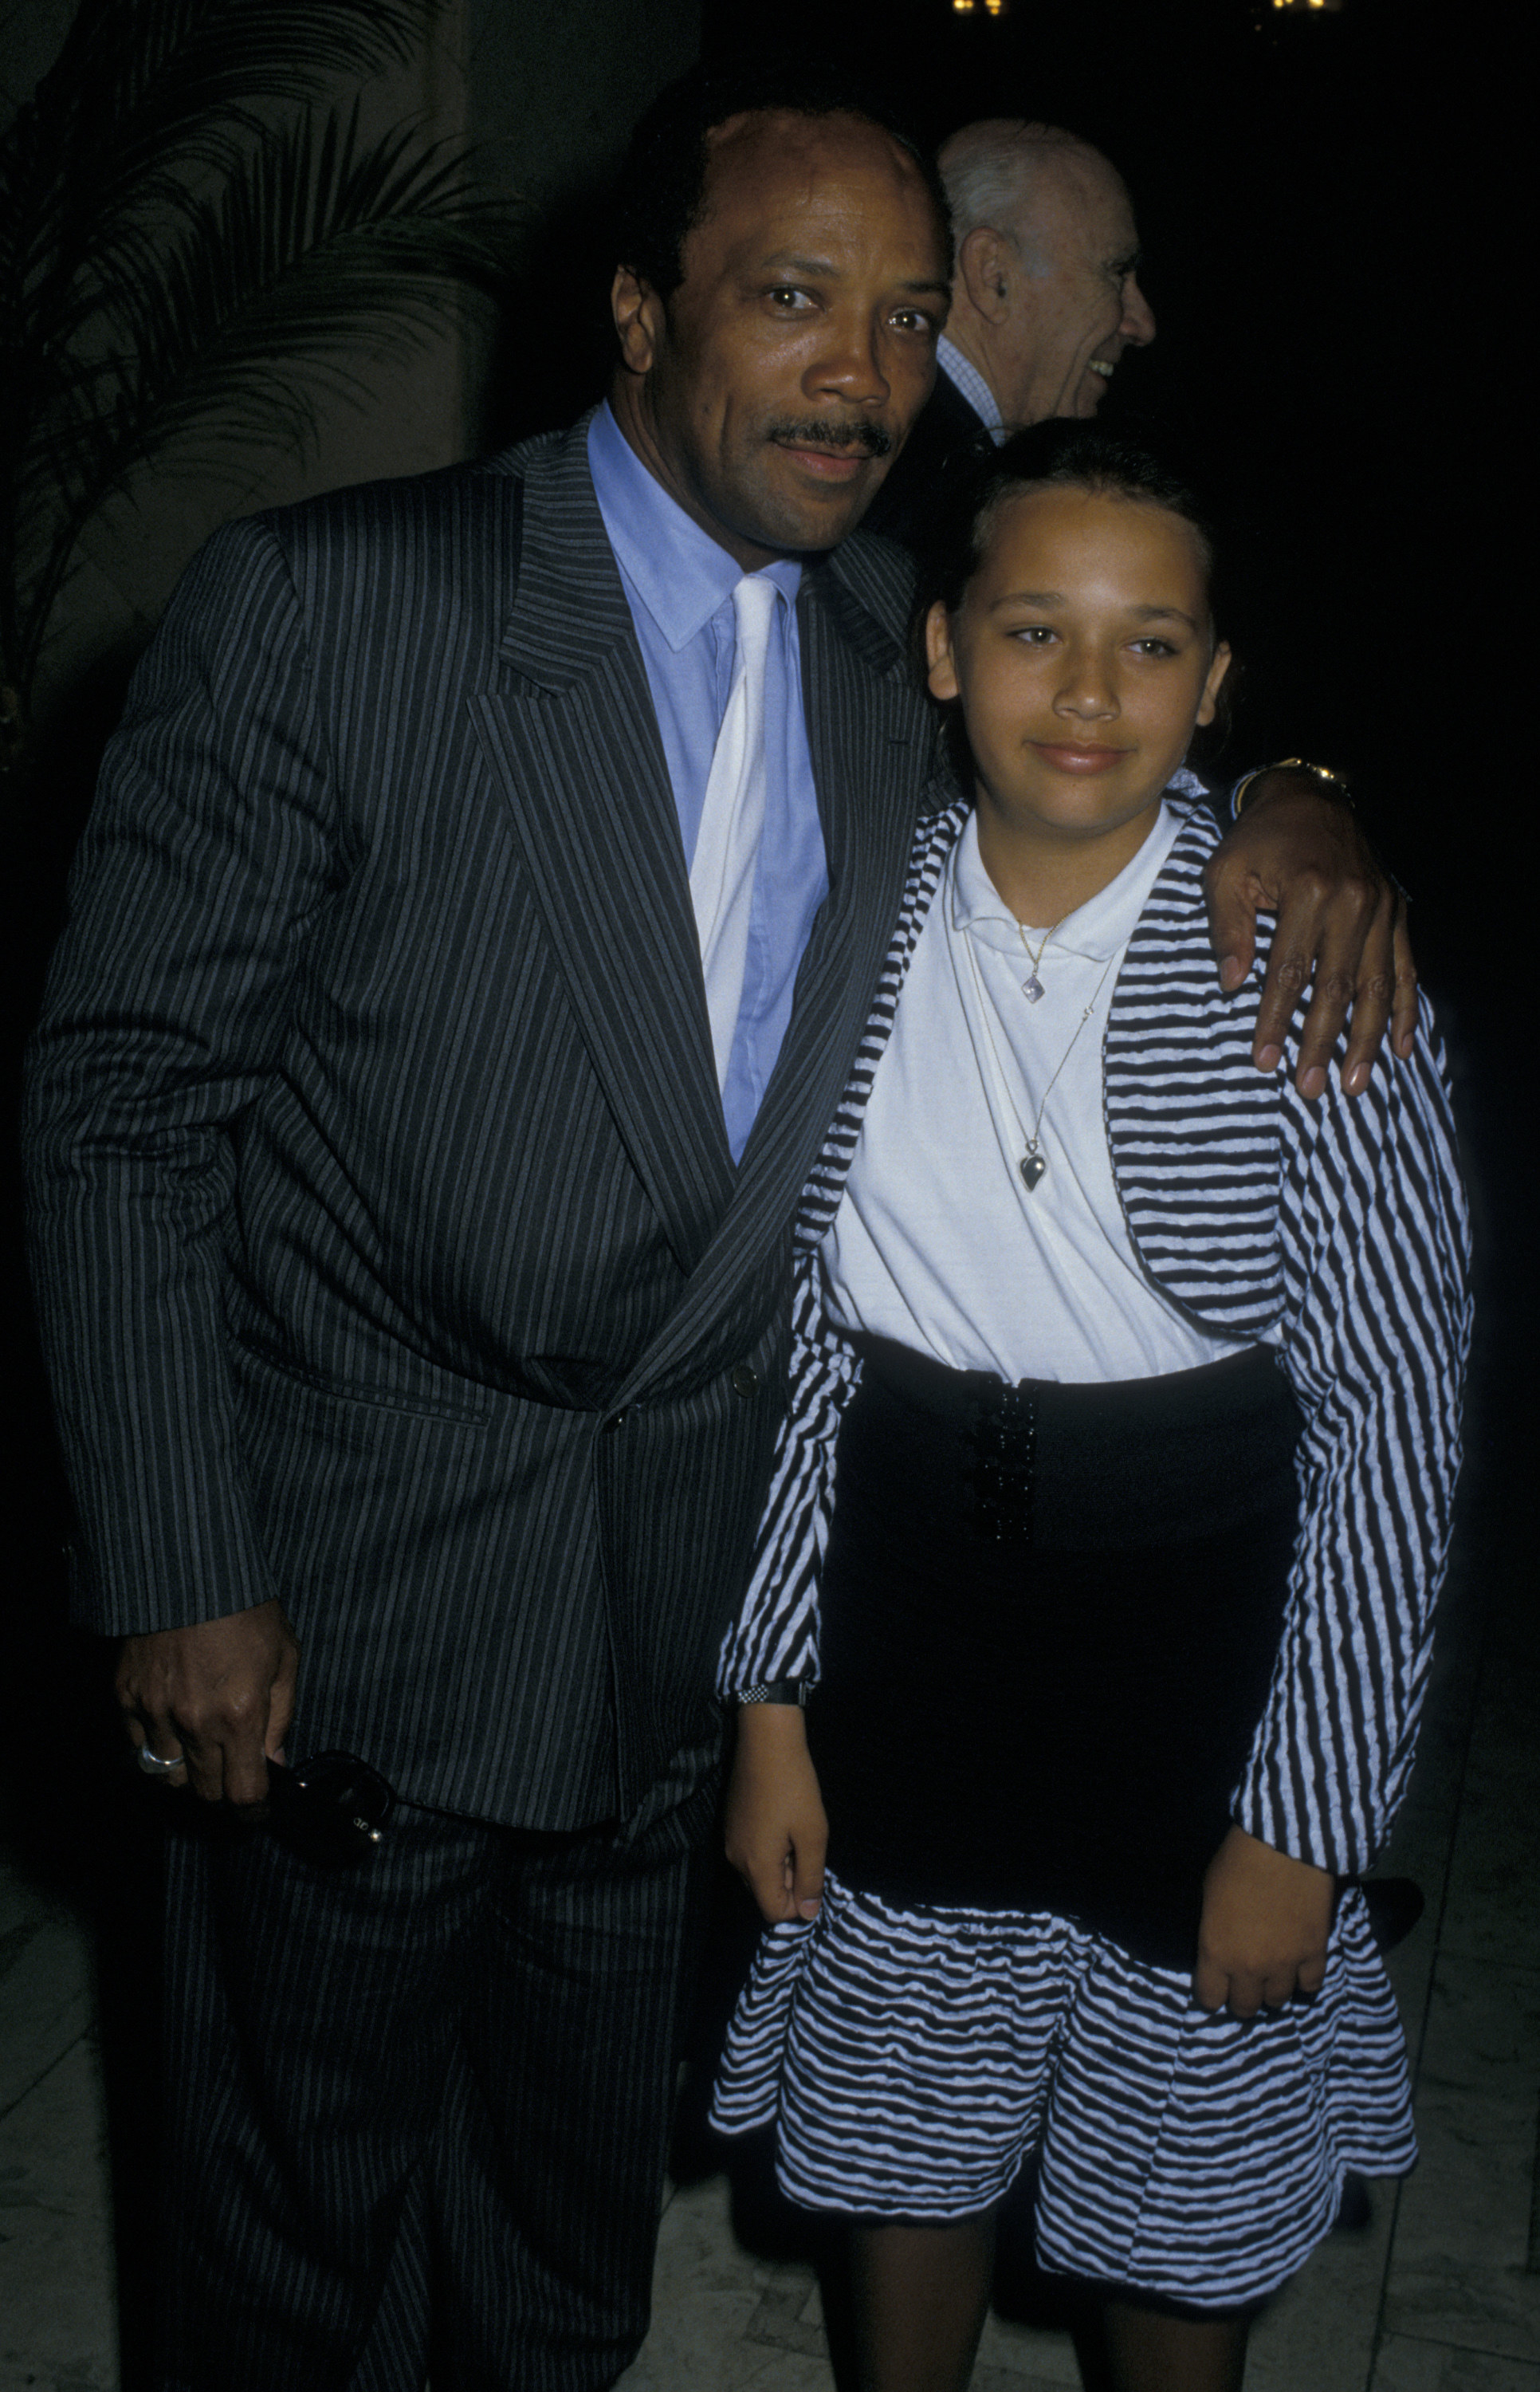 Quincy Jones and Rashida Jones posing for a photo at a hotel